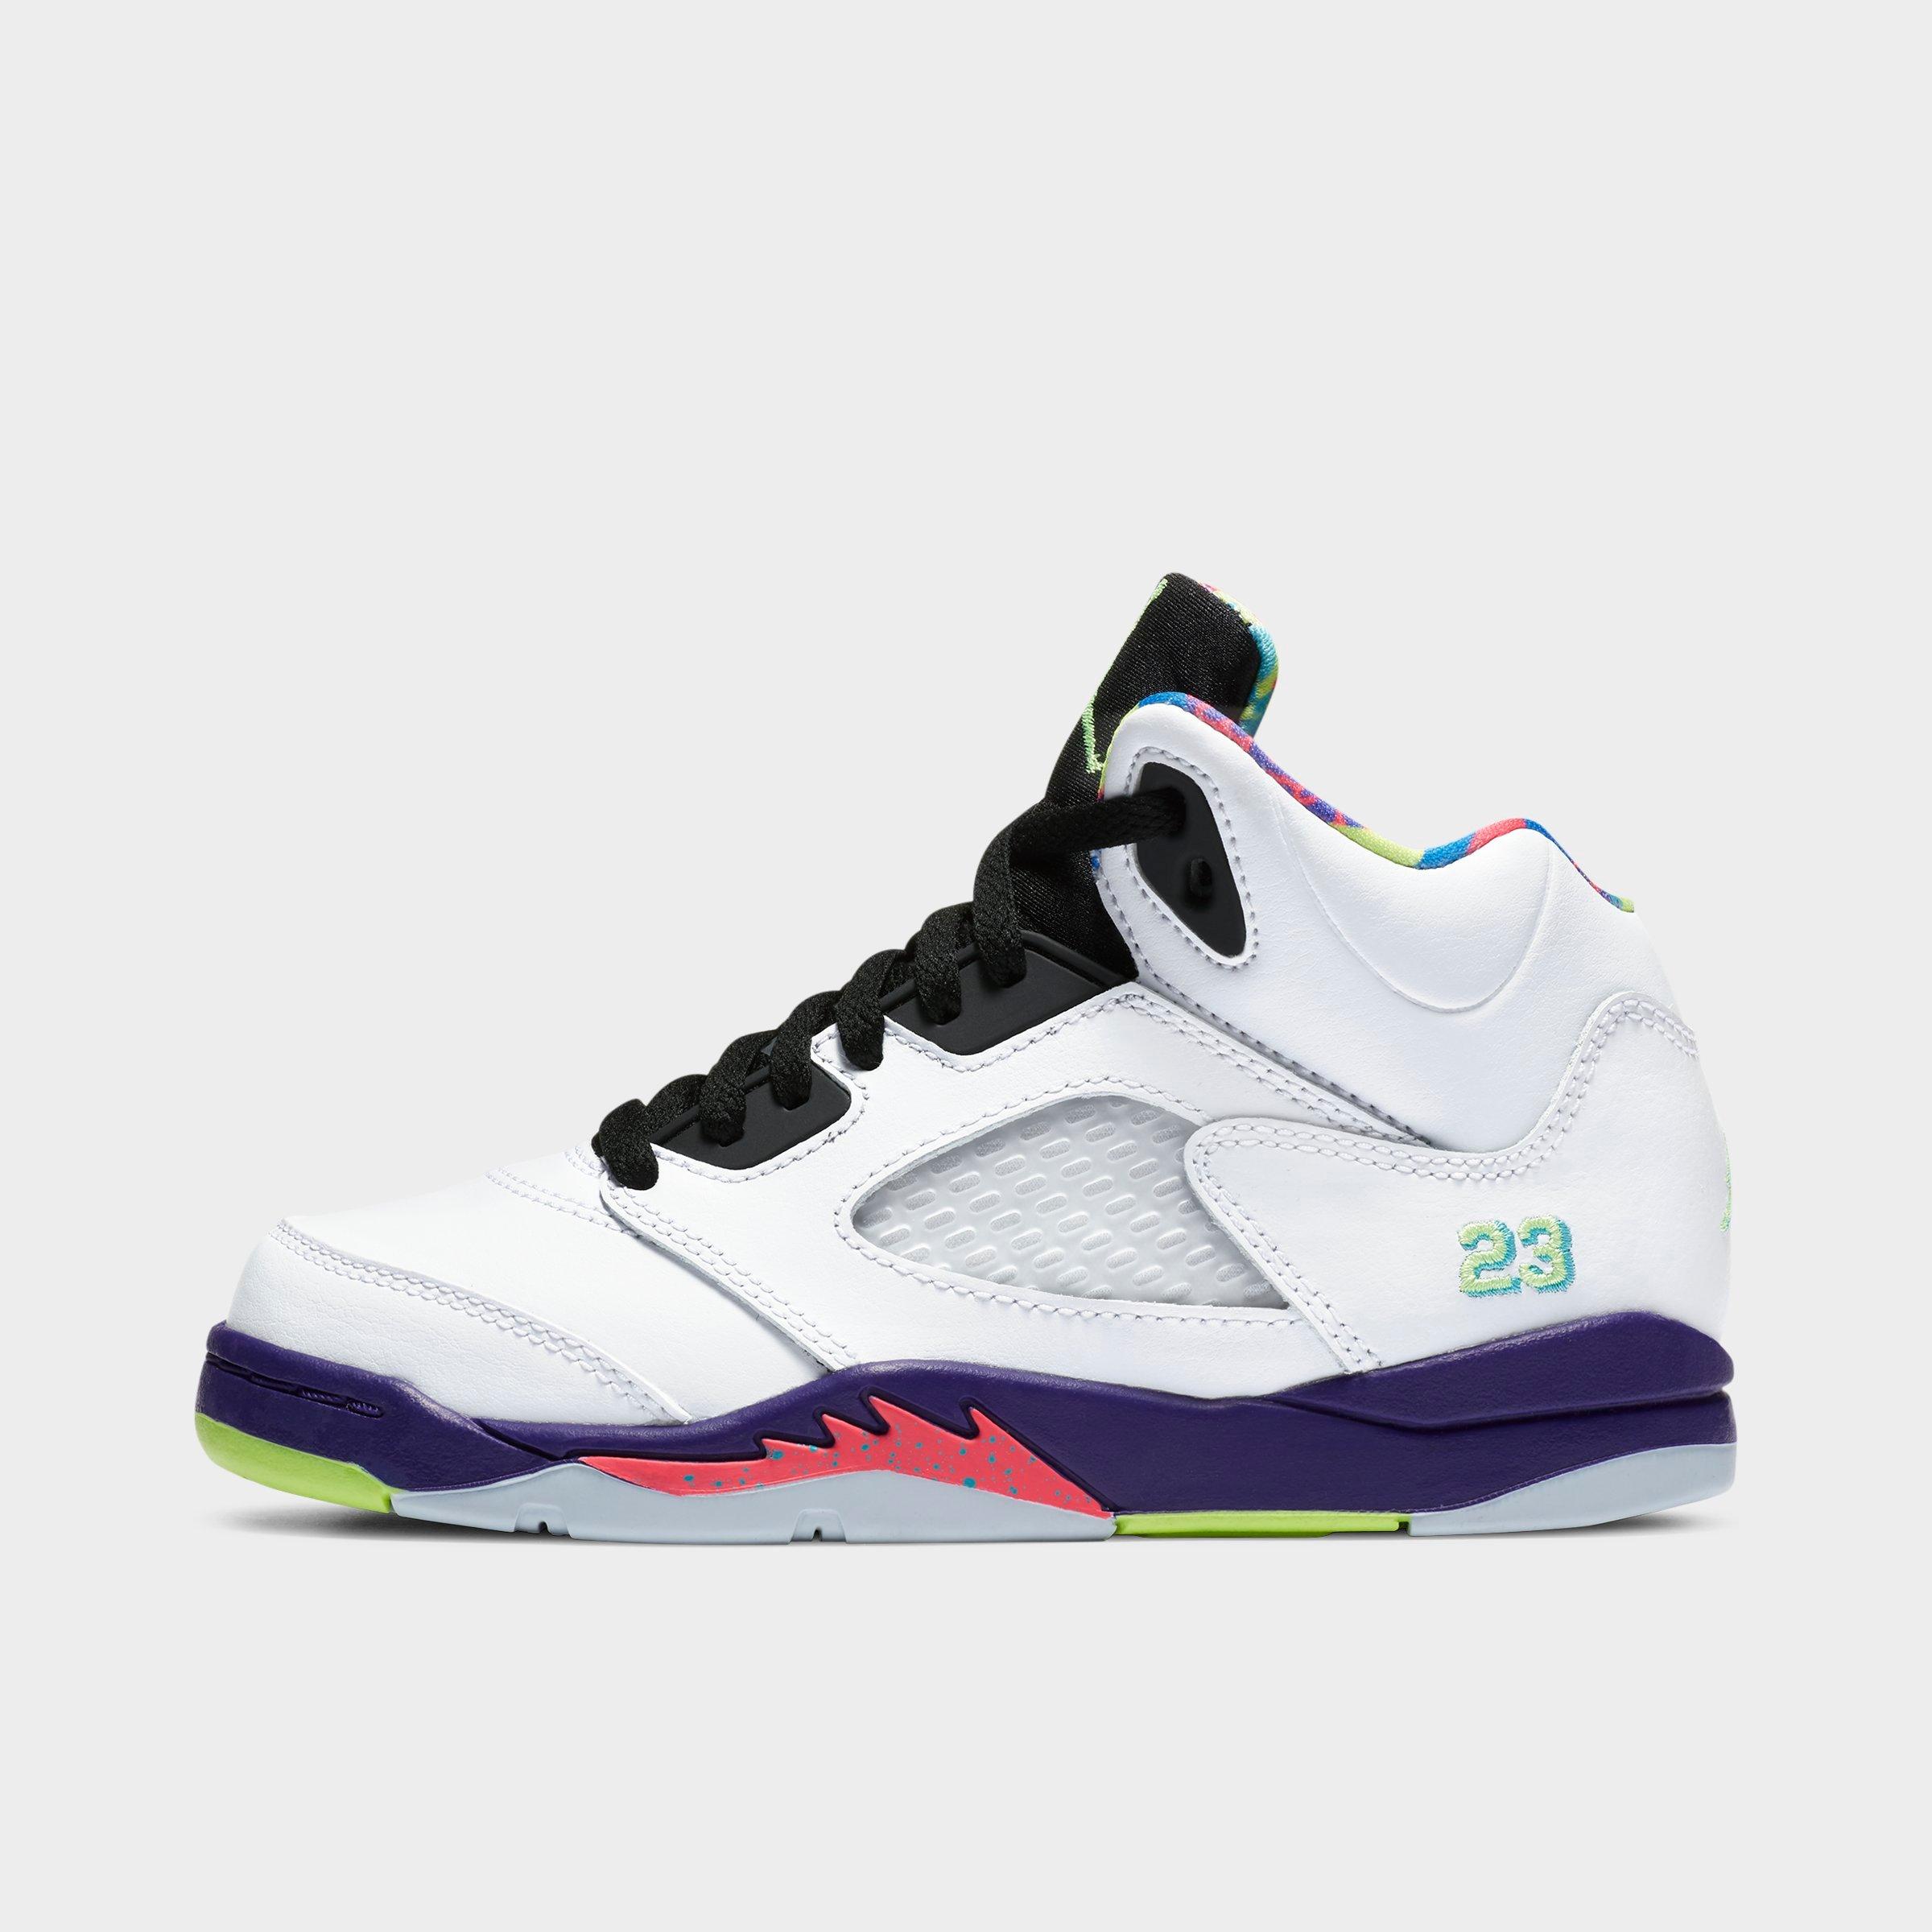 Air Jordan Retro 5 Basketball Shoes 